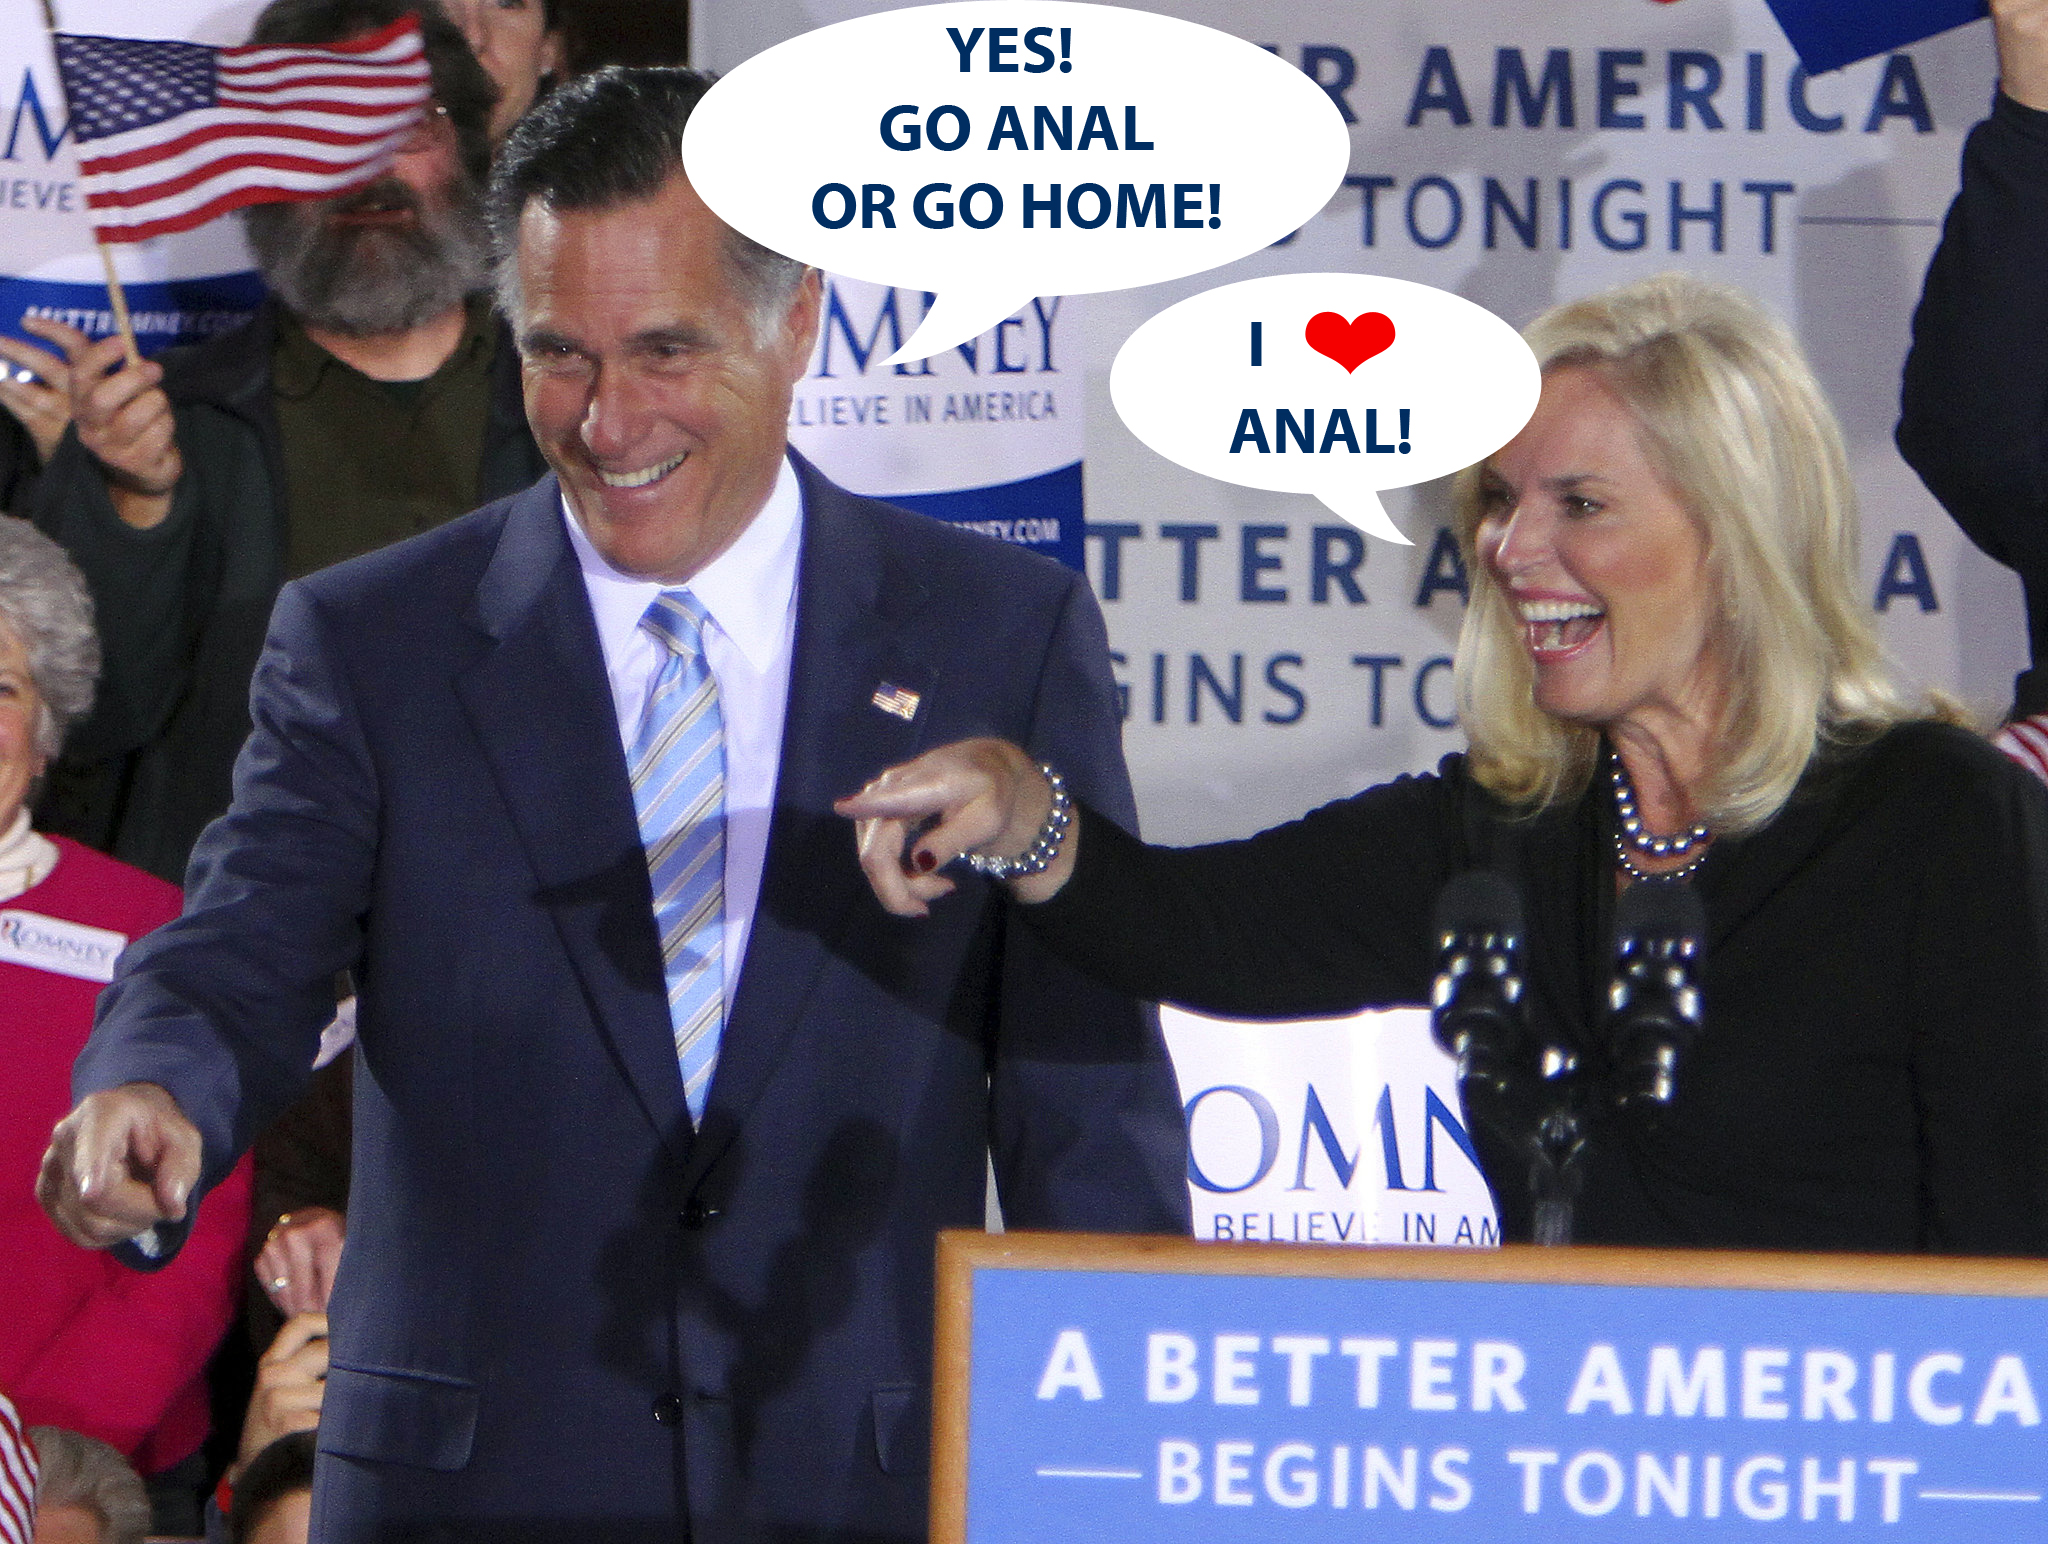 Romney camp chooses the bum!